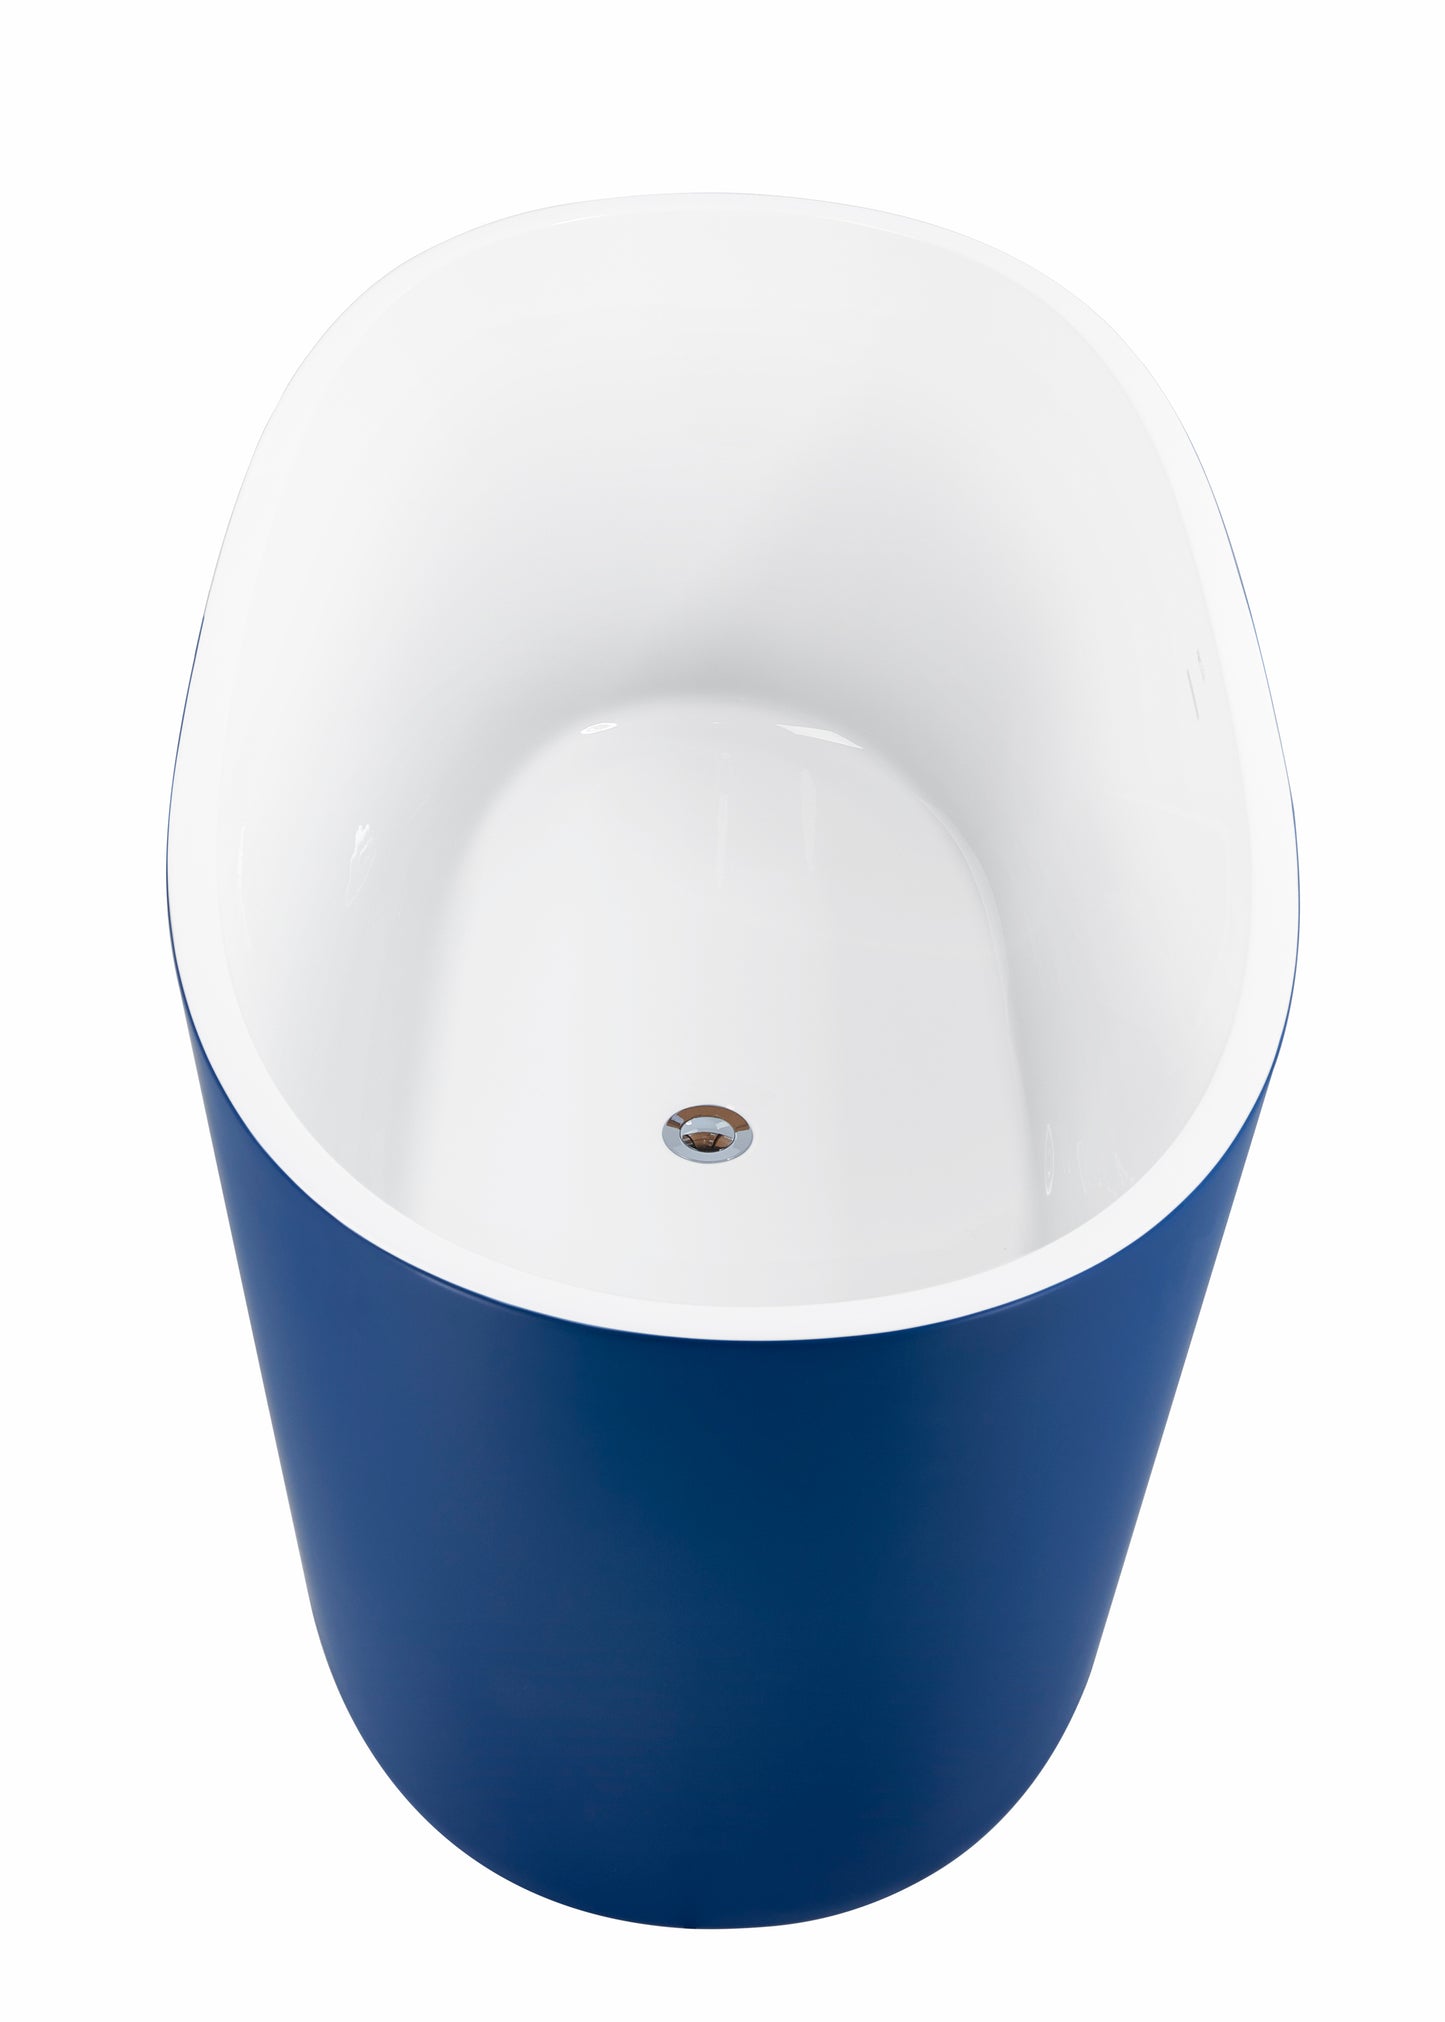 63" 100% Acrylic Freestanding Bathtub，Contemporary Soaking Tub，white inside and blue outside